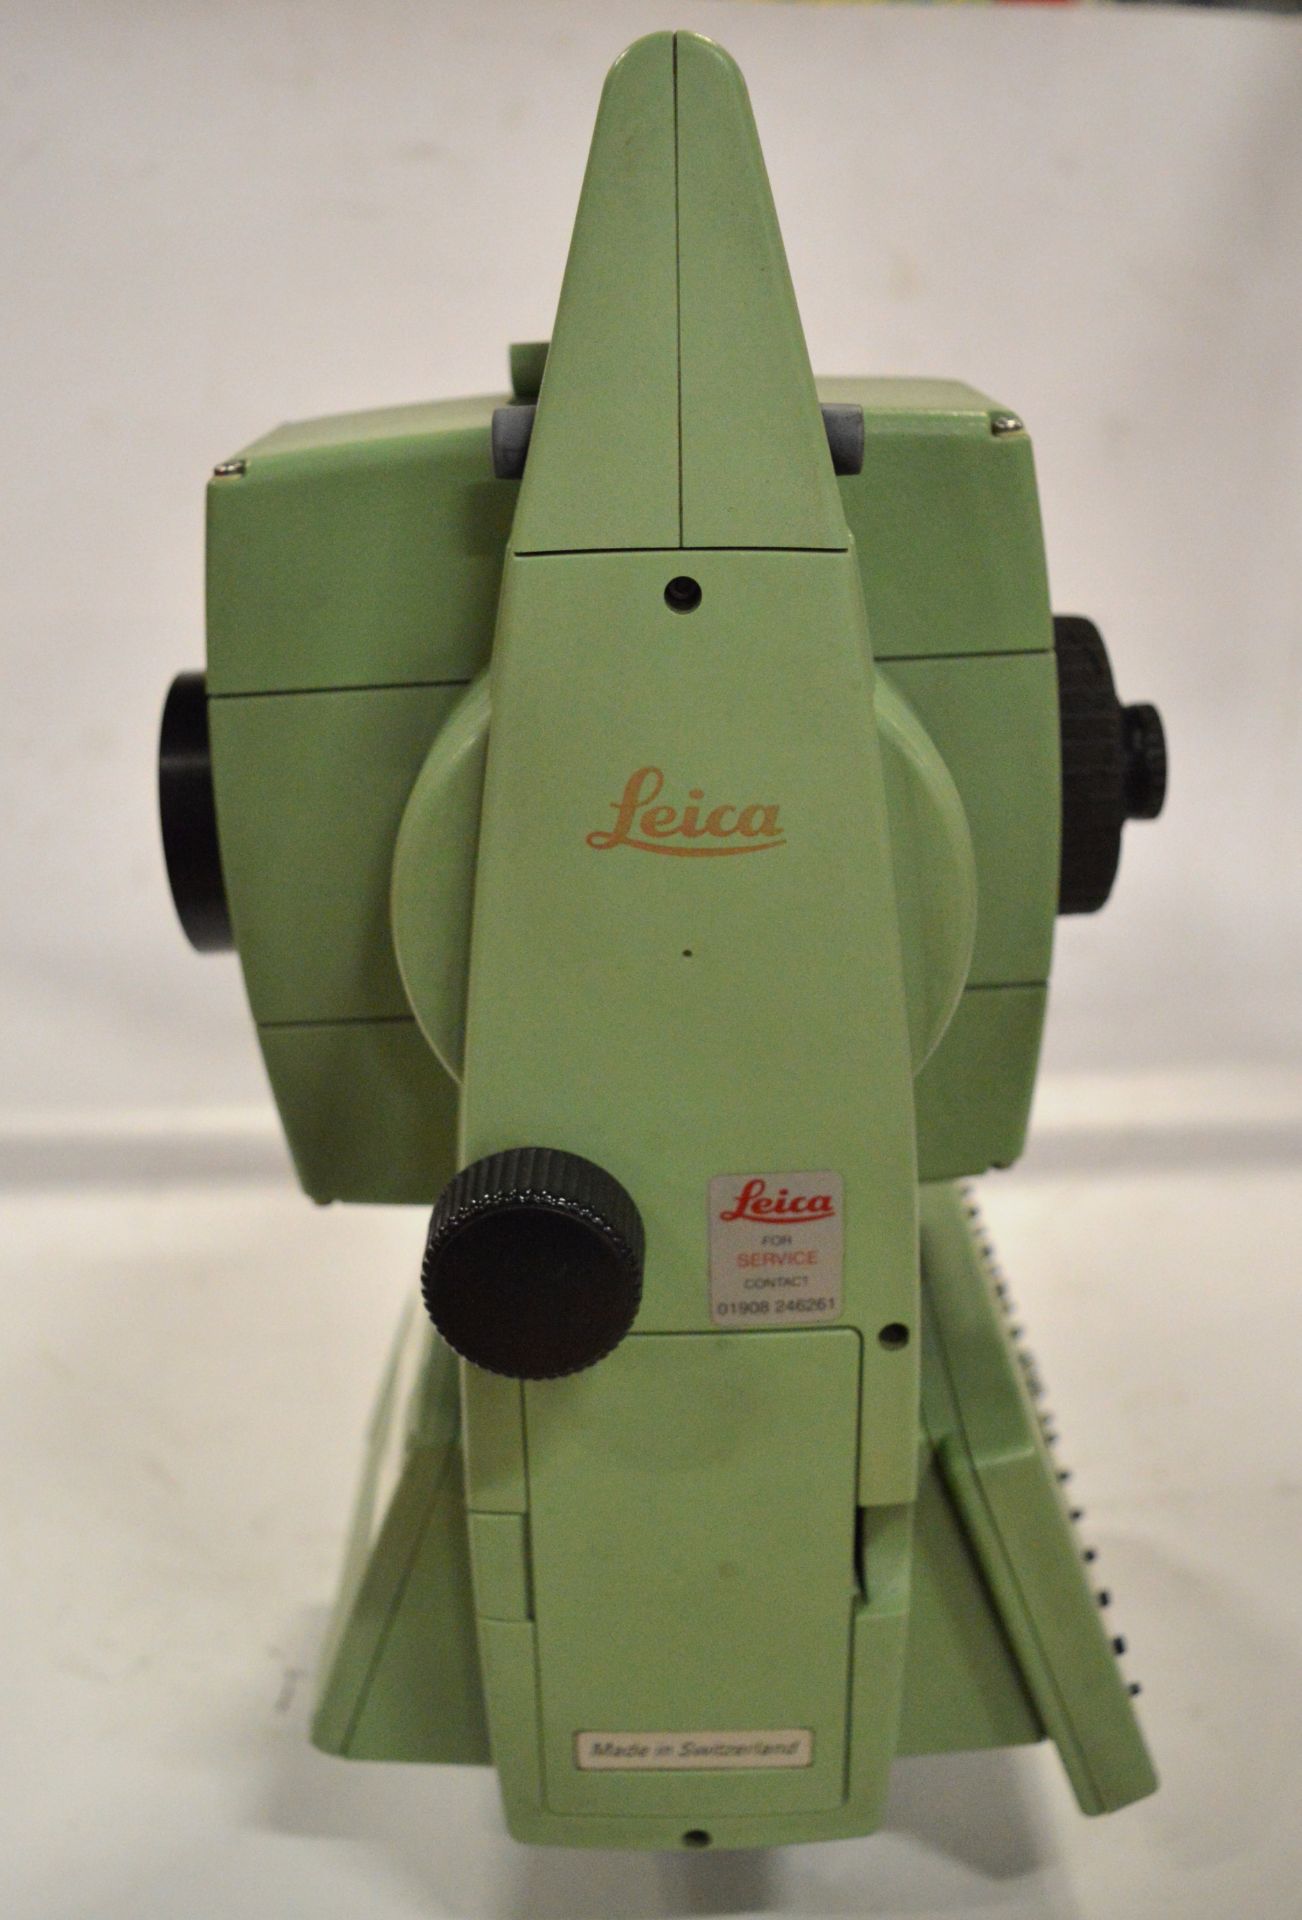 Leica TCRA1103 Surveying Equipment. - Image 5 of 5